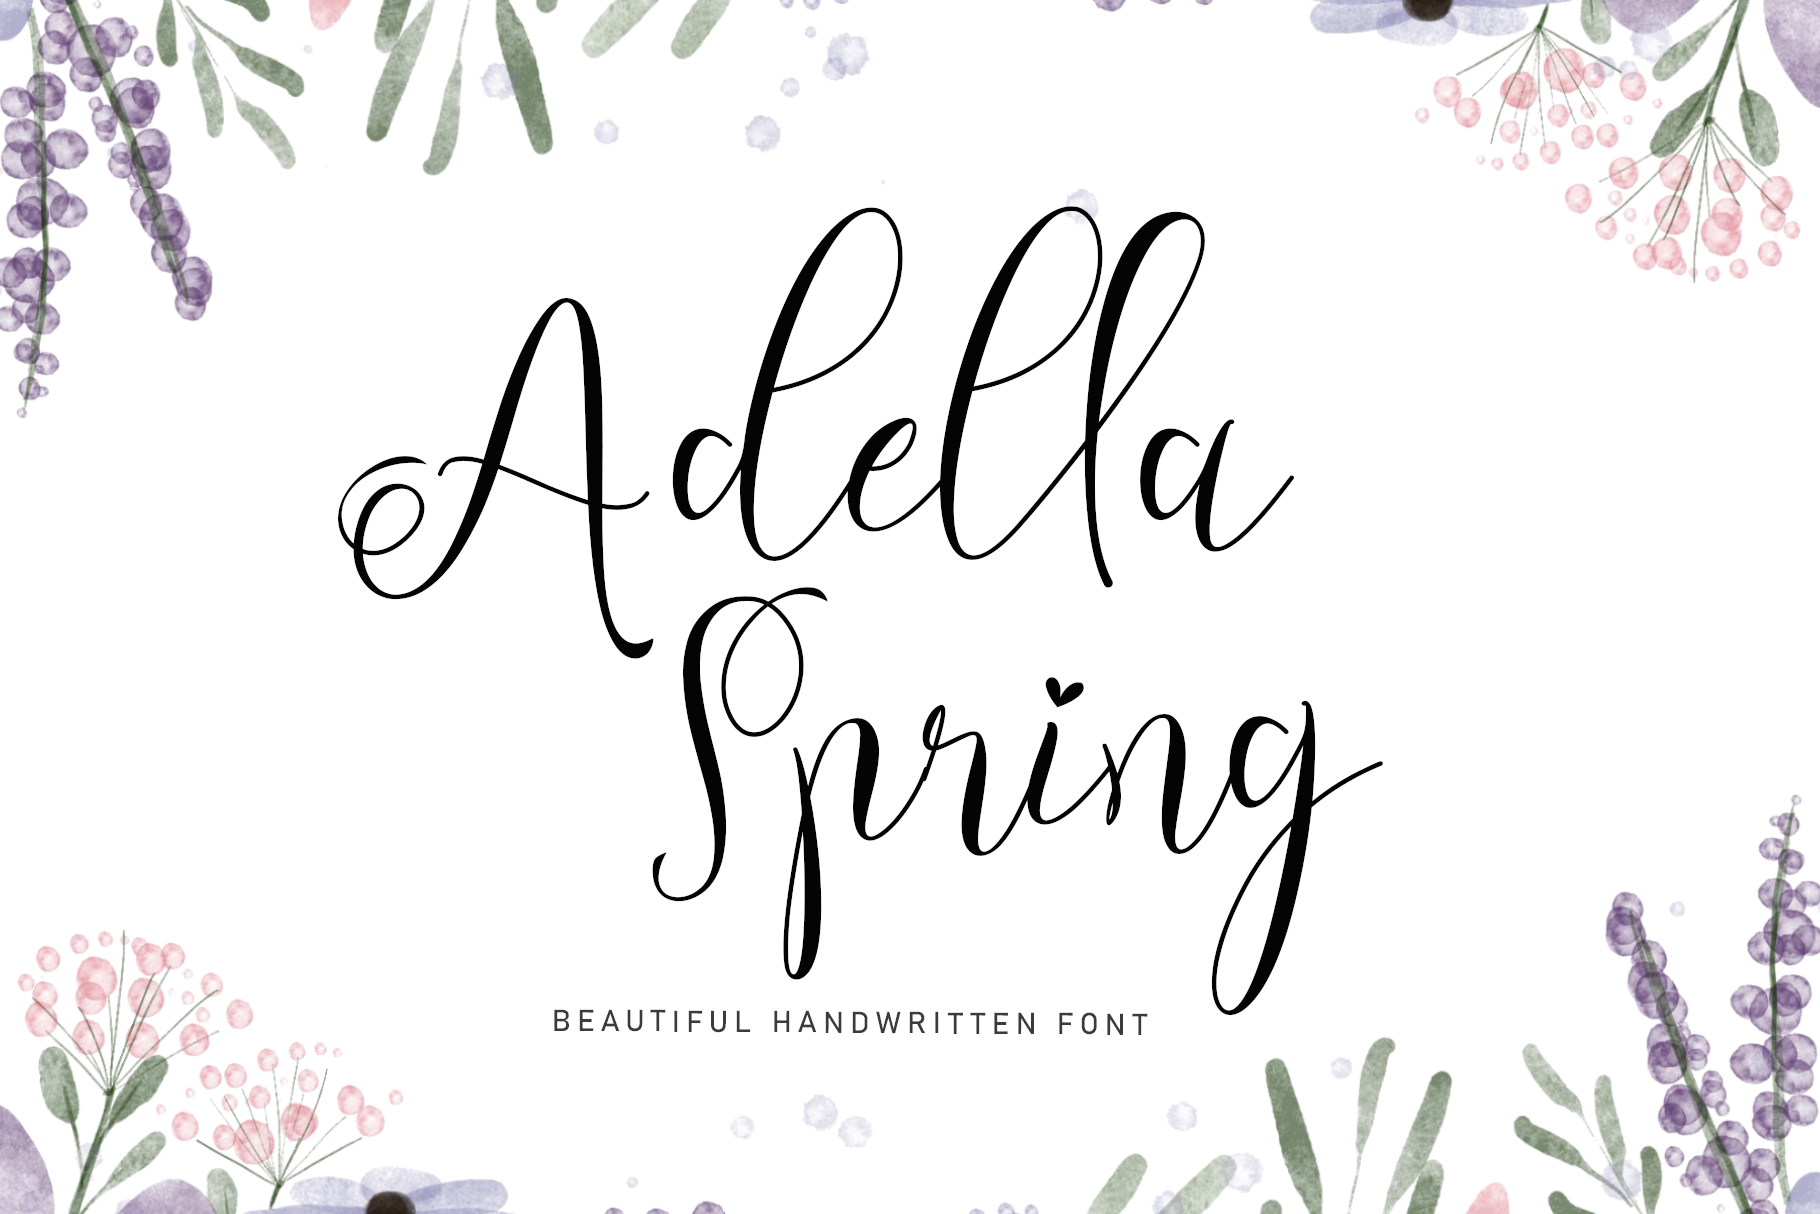 Adella Spring